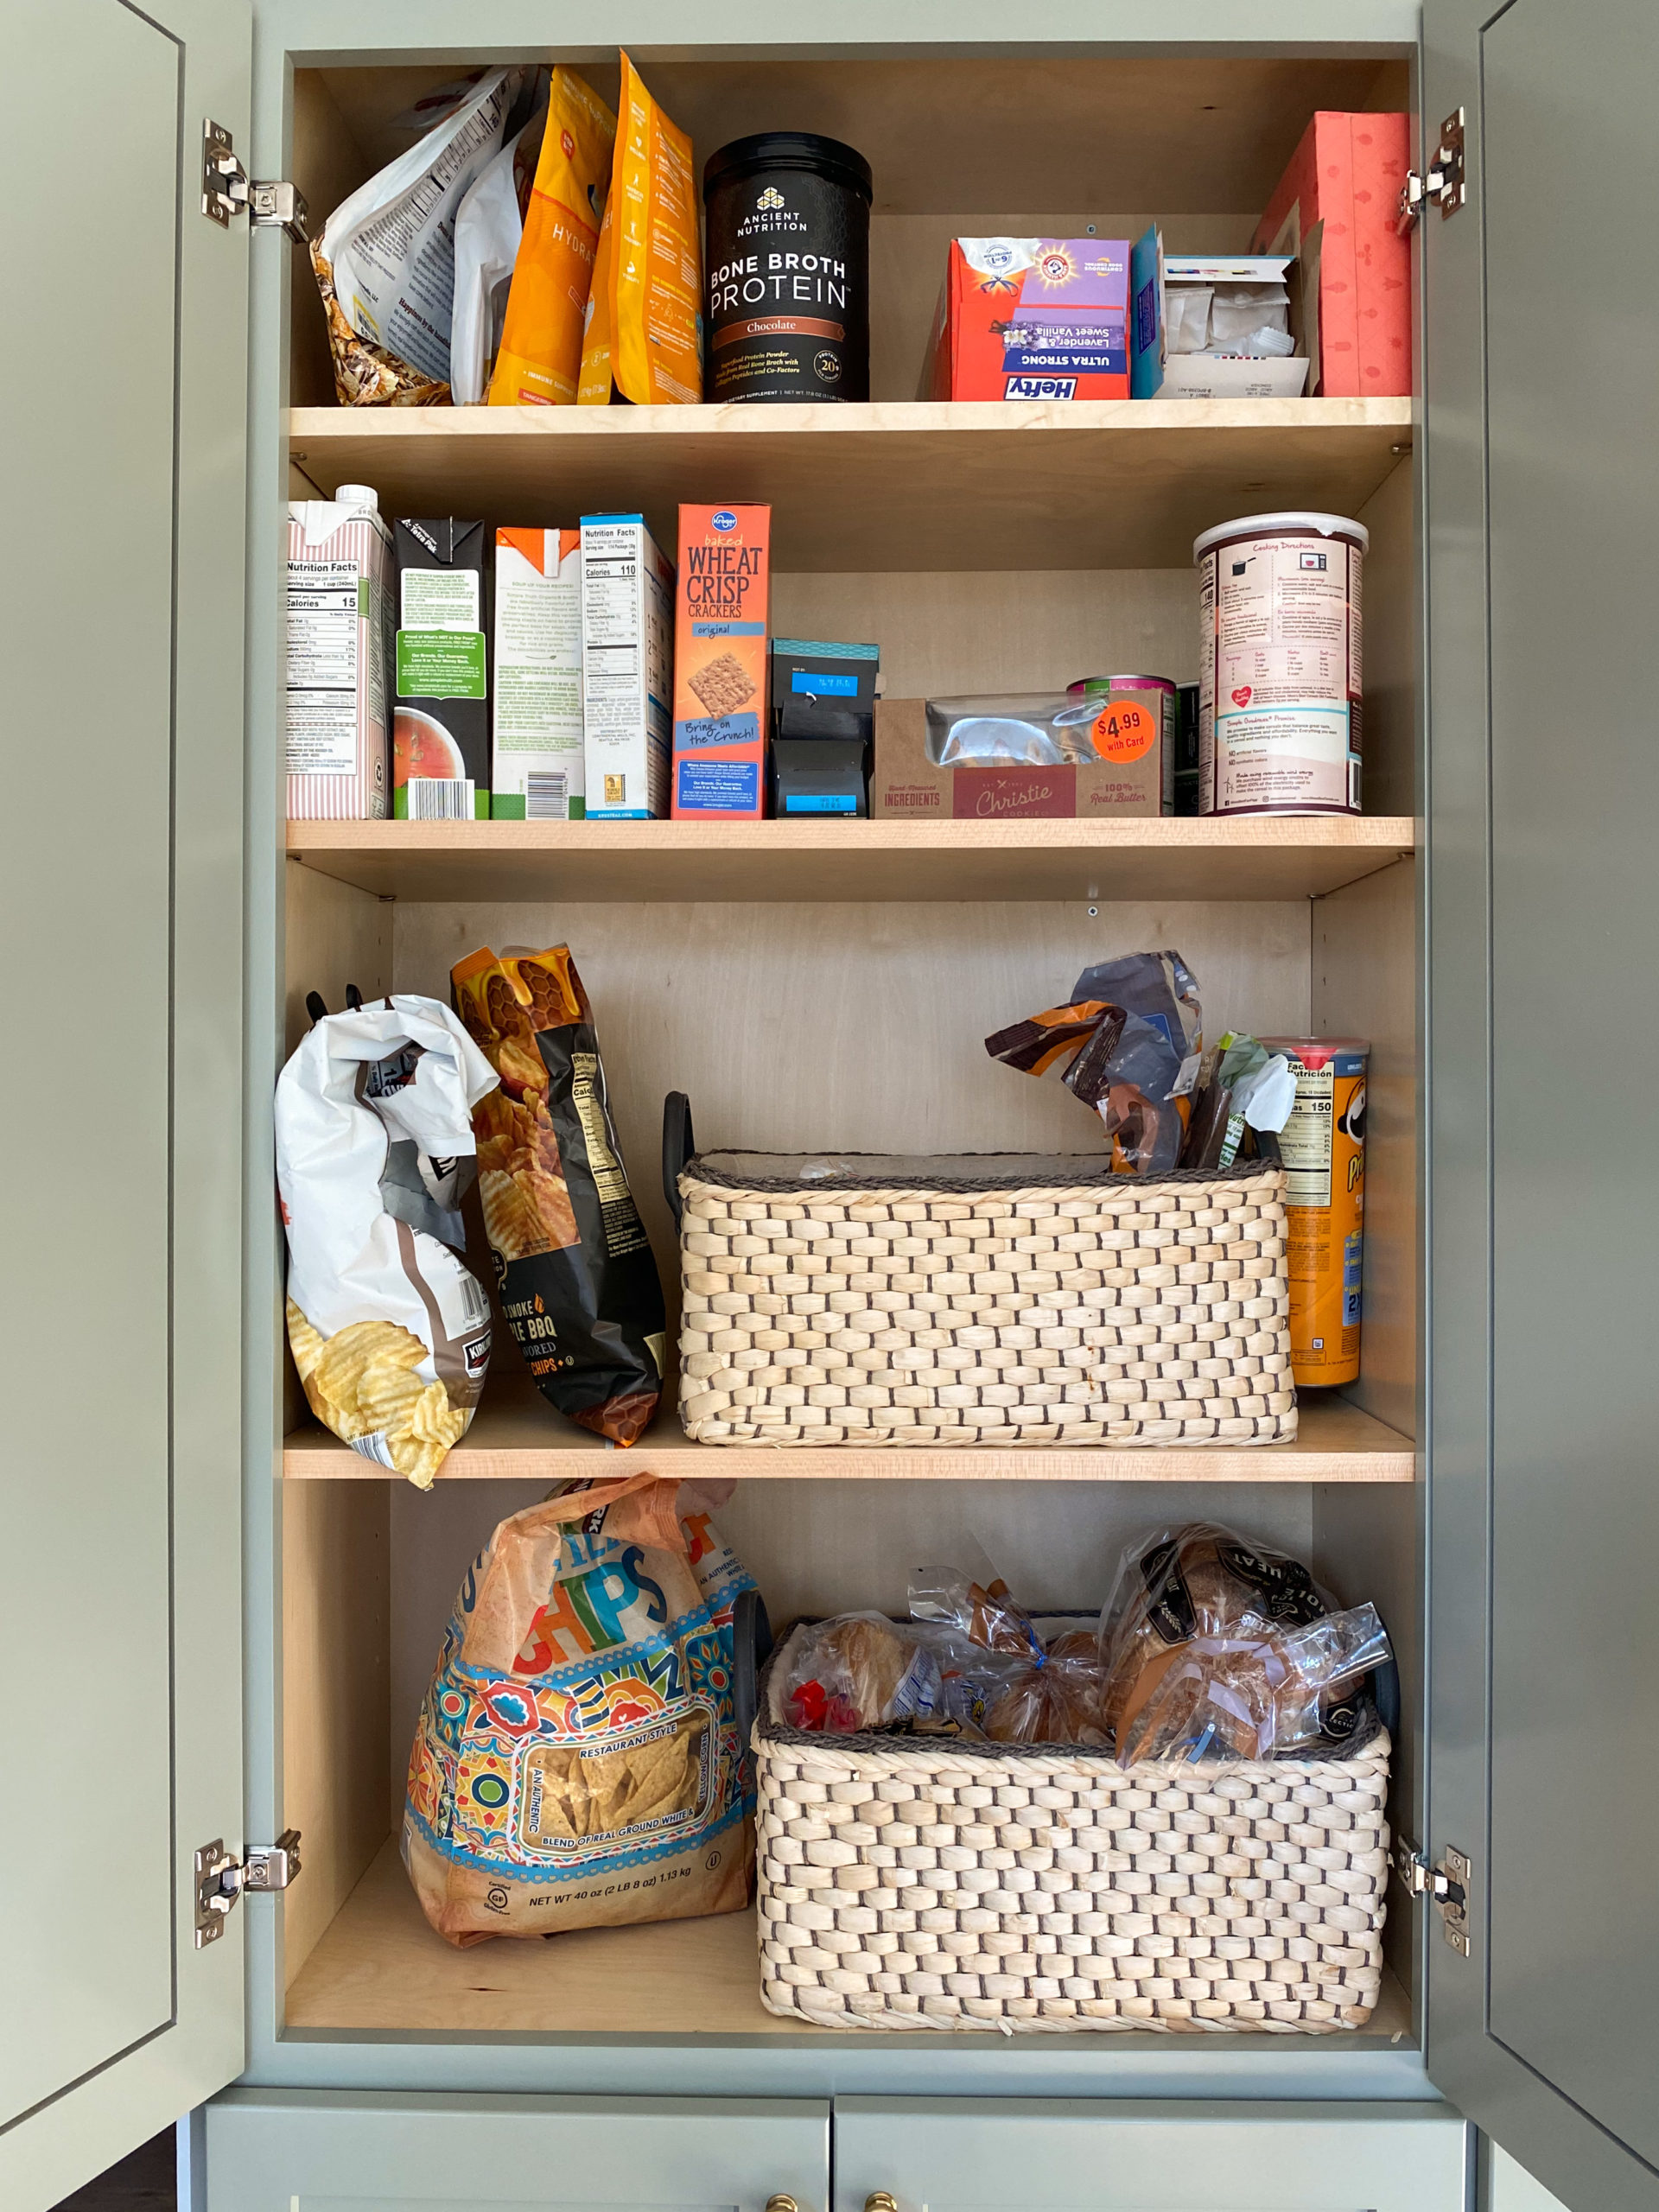 Photos Show Inside Beautifully Organized Pantries and Refrigerators